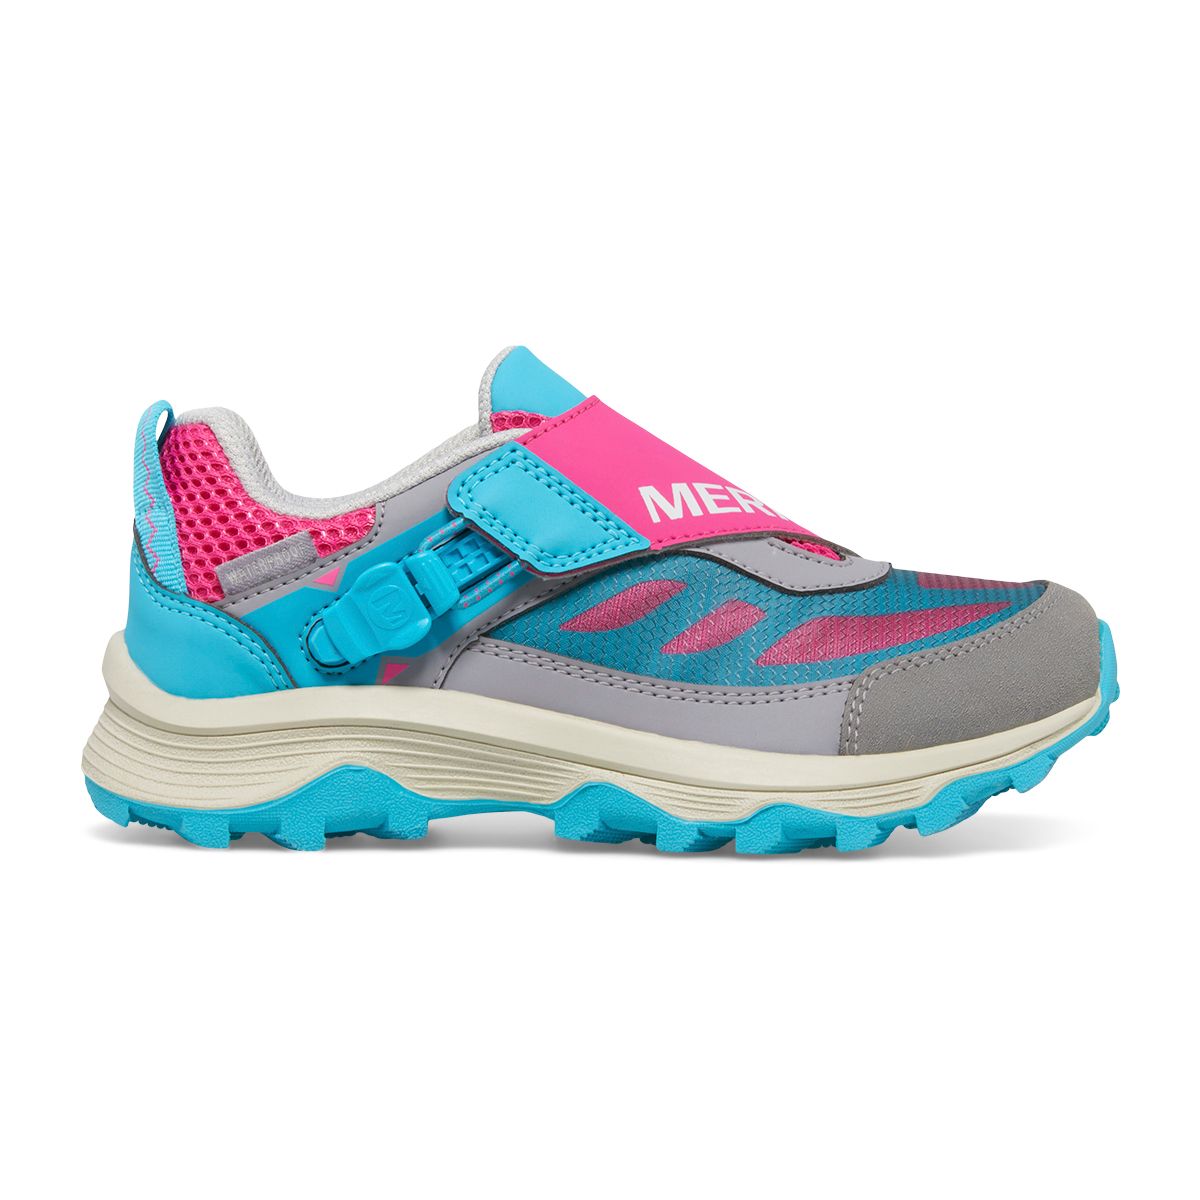 Kids' Waterproof Hiking Boots, Shoes, & Sneakers | Merrell